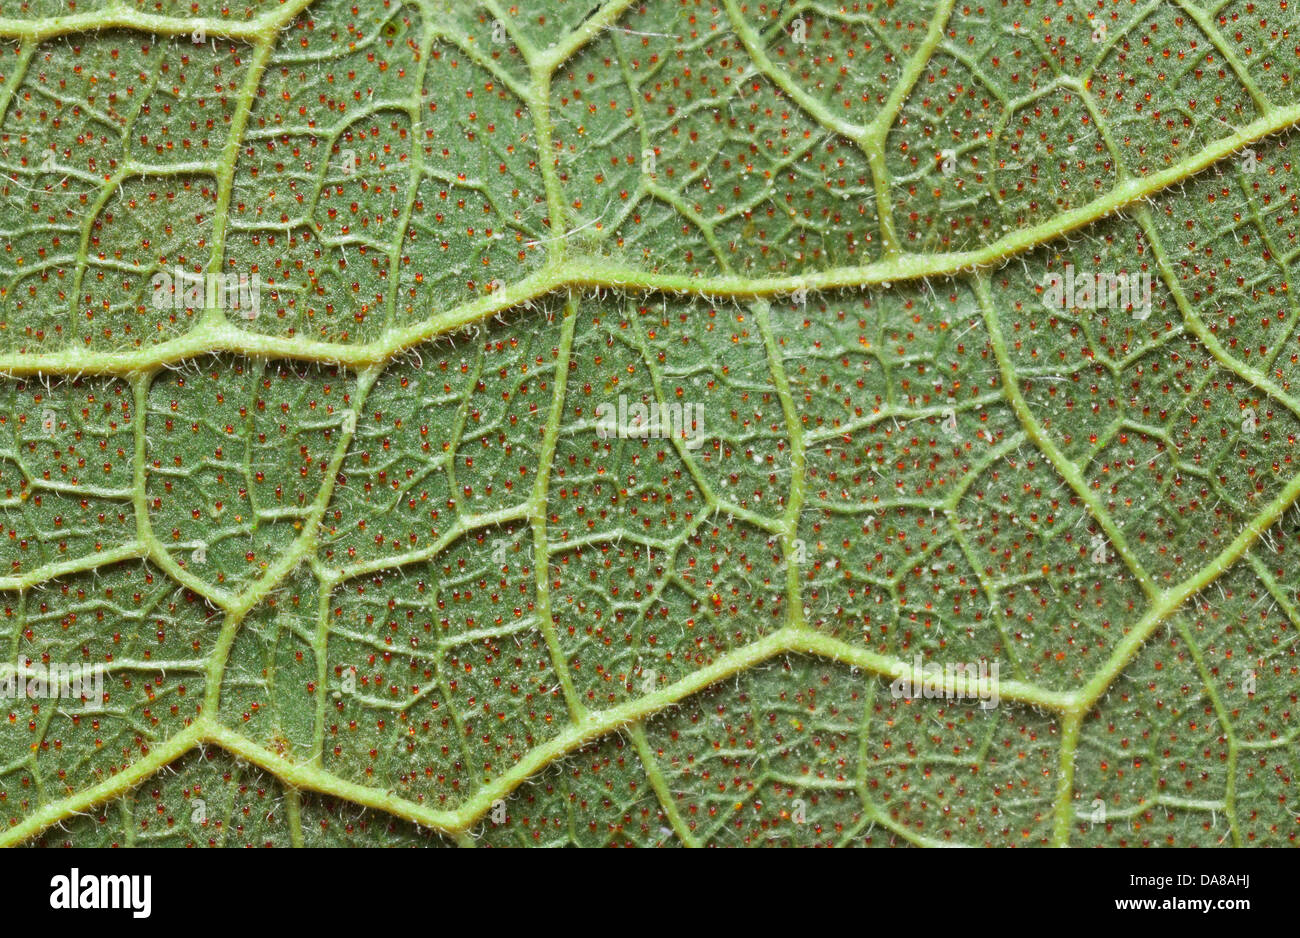 Glanduläre Blatt Unterseite hohe Makroaufnahme zeigen Venenstruktur Stockfoto